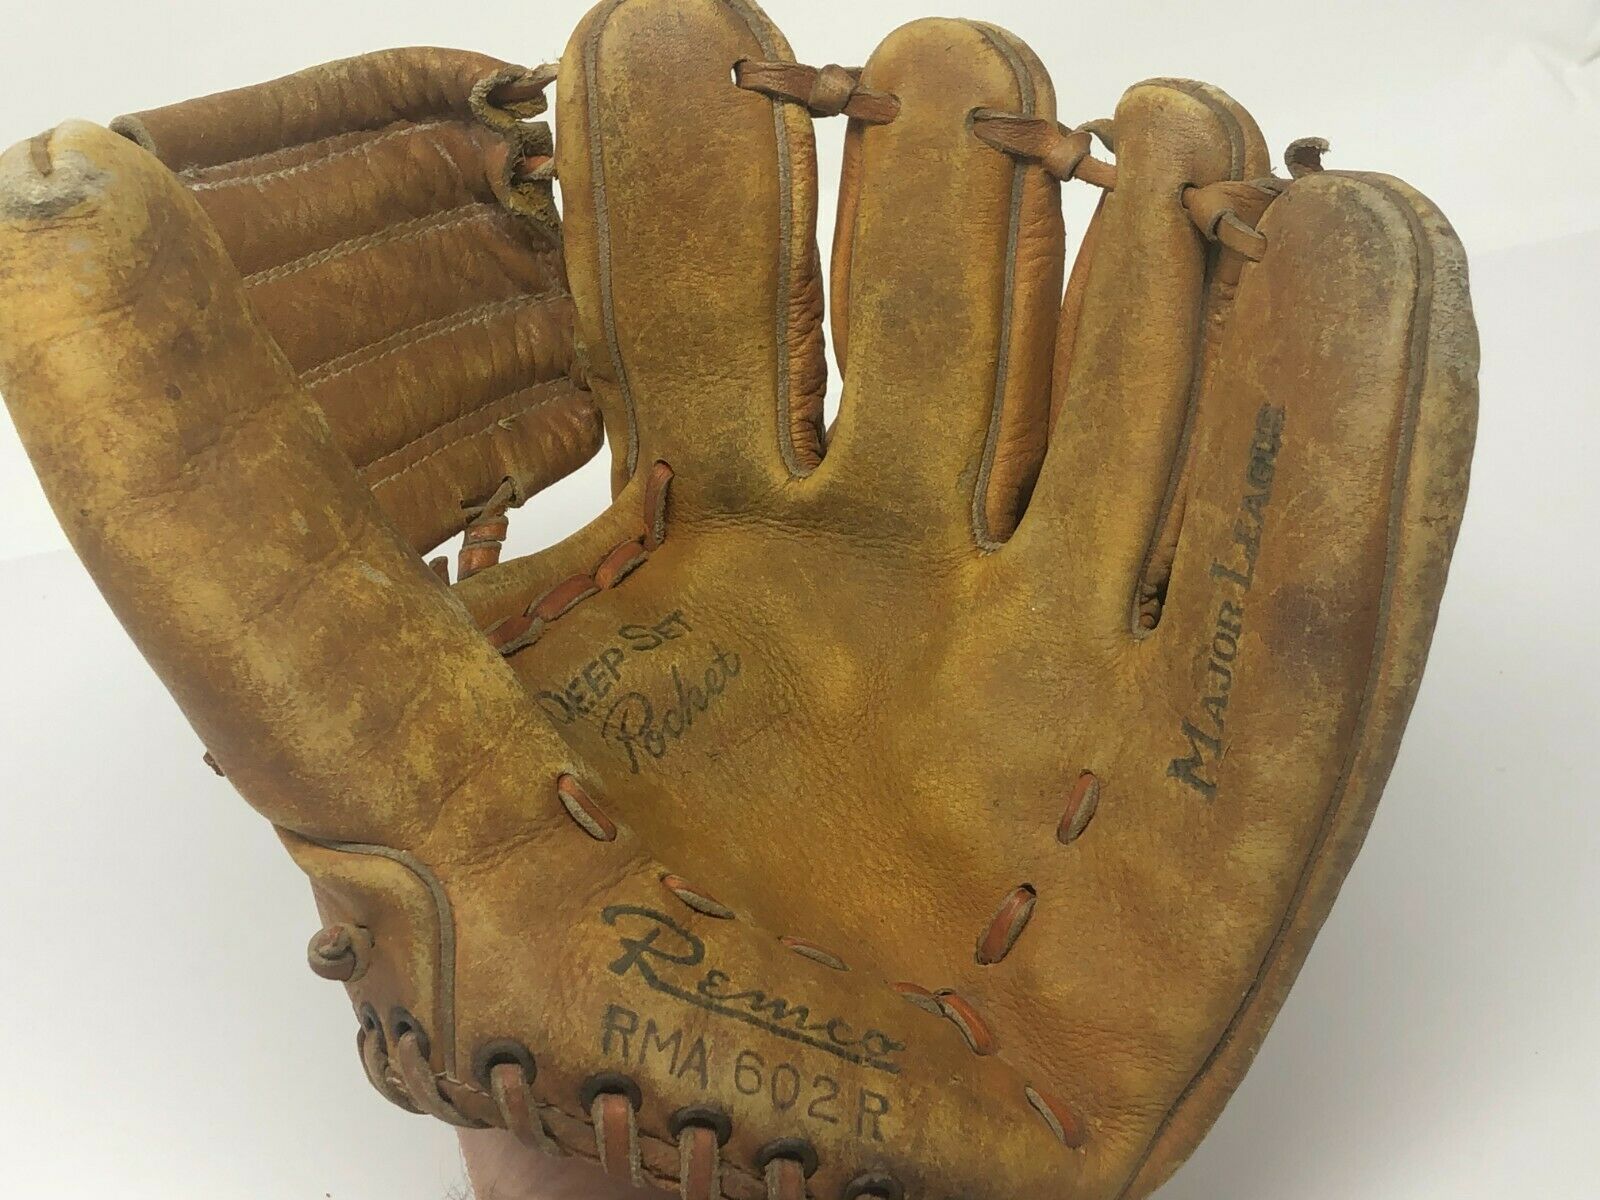 Remco Baseball Glove Rma 602 R Vintage Major League Right Hand Throw